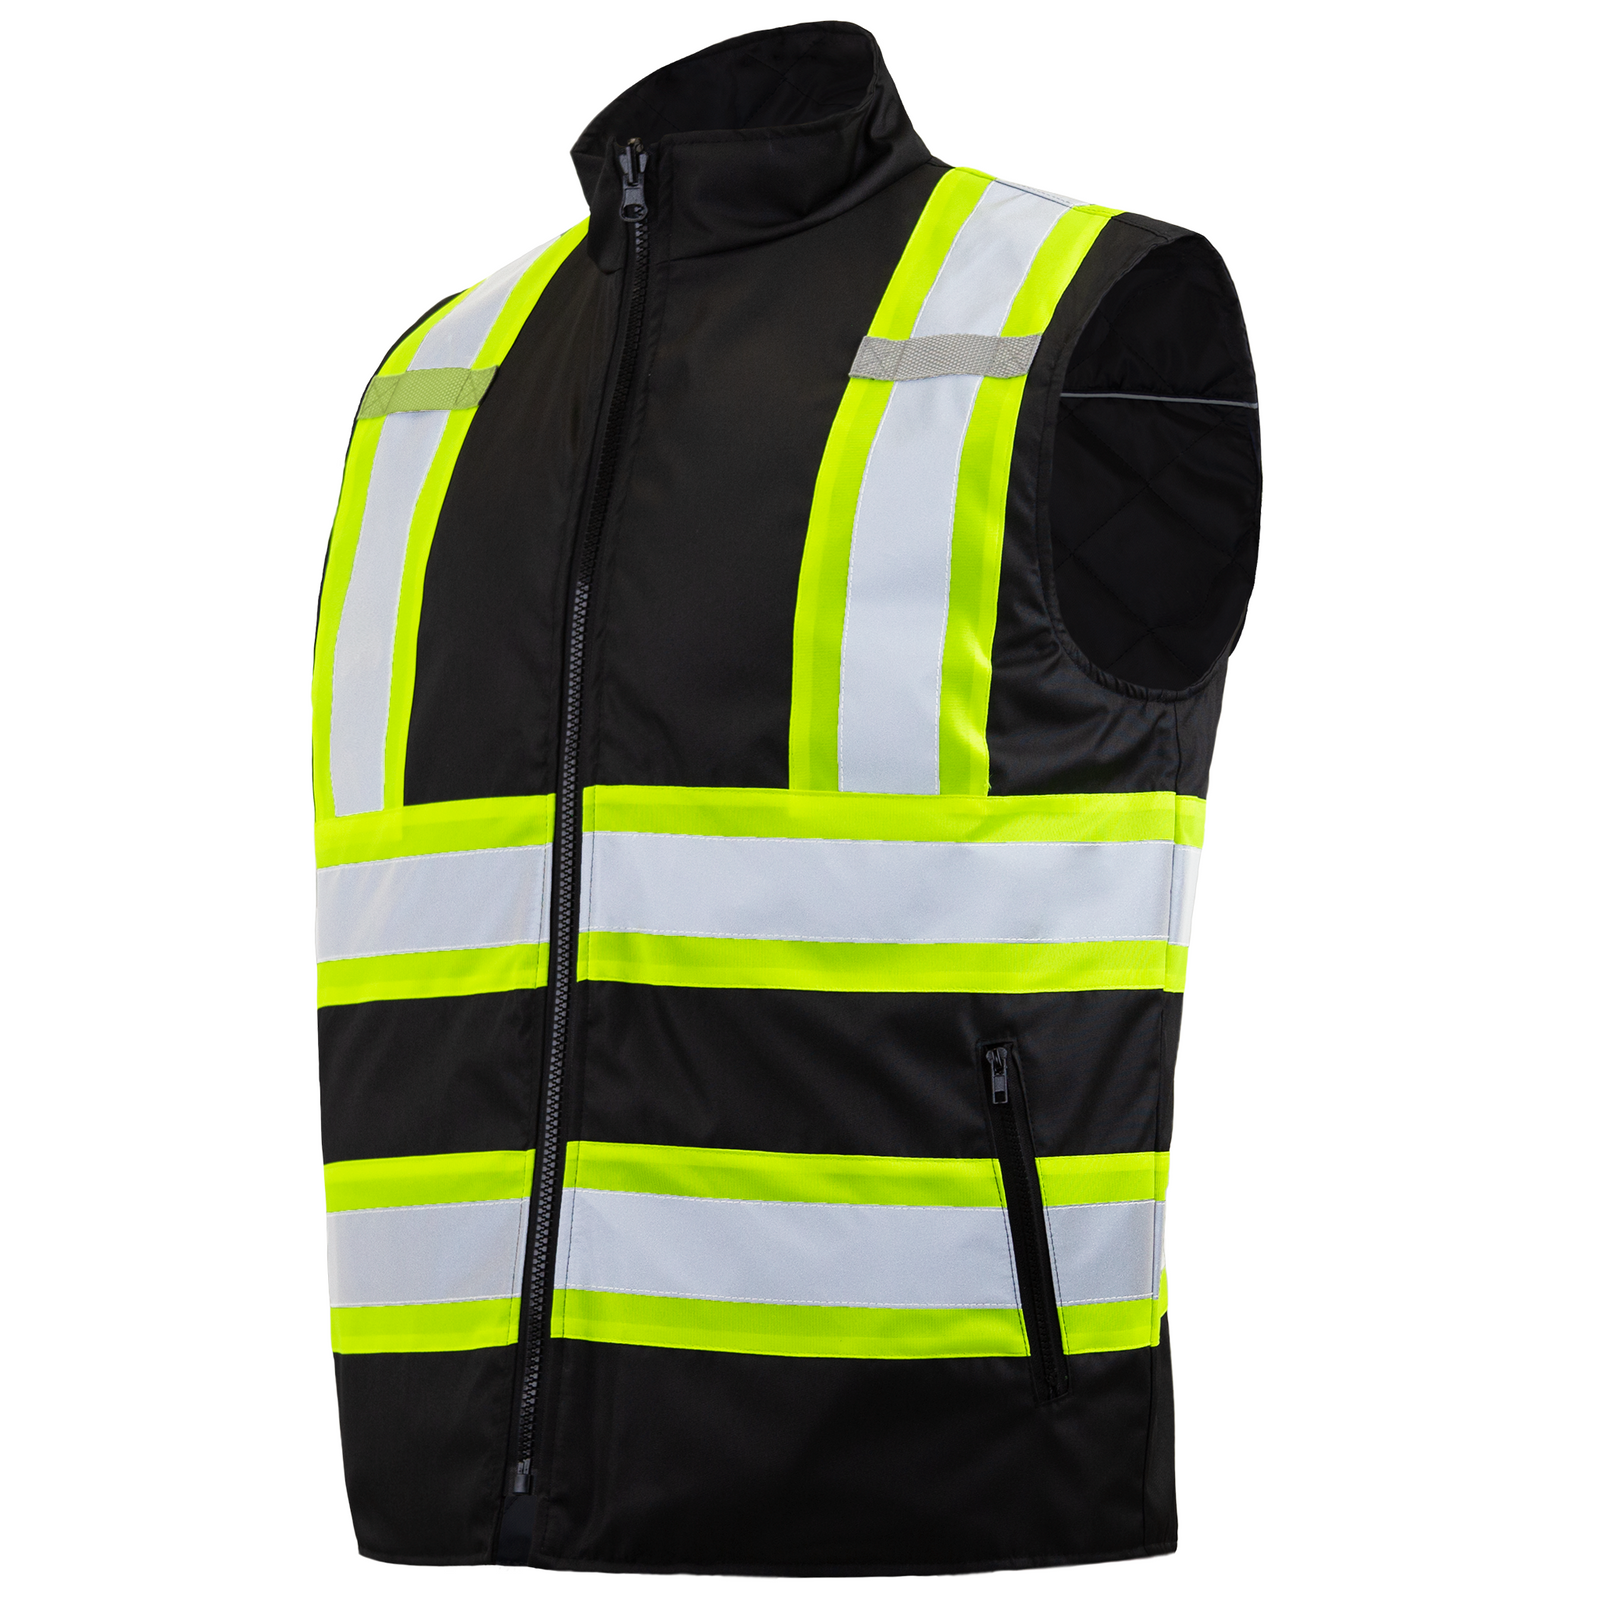 SA16A Reflective Vest - Dromex - High Visibility Safety Wear